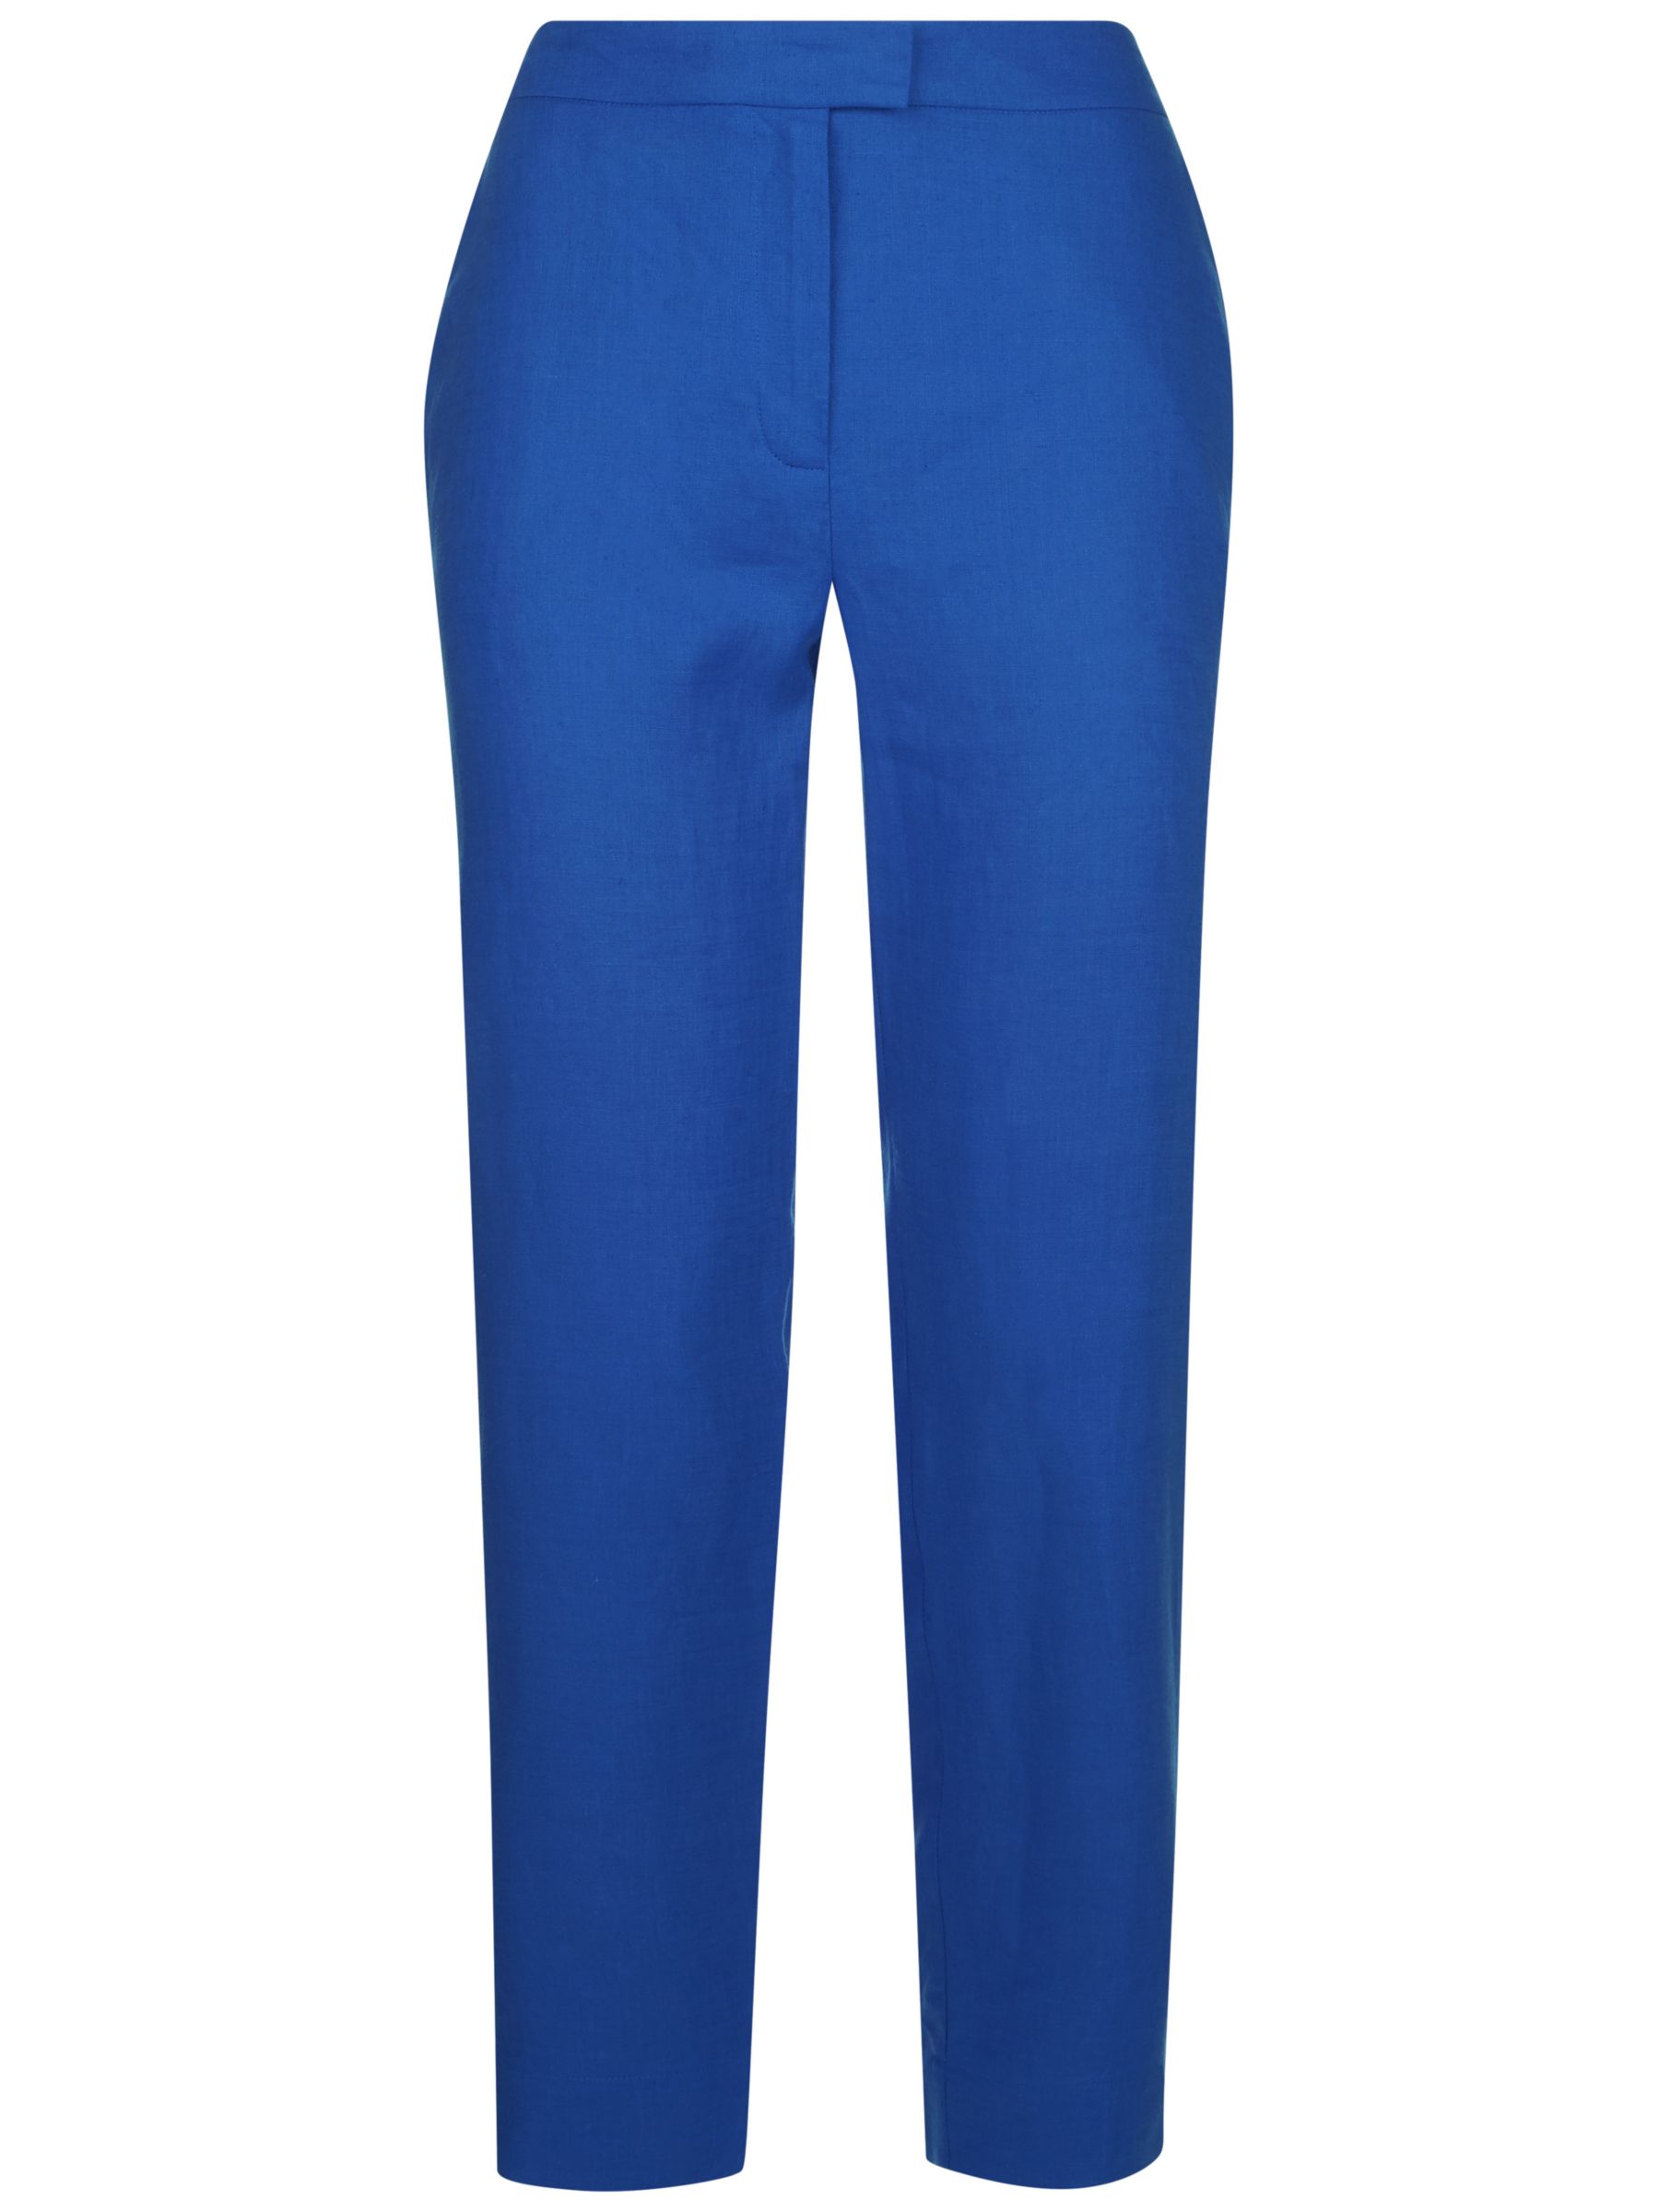 Jaeger 7/8 Linen Trousers, Blue at John Lewis & Partners